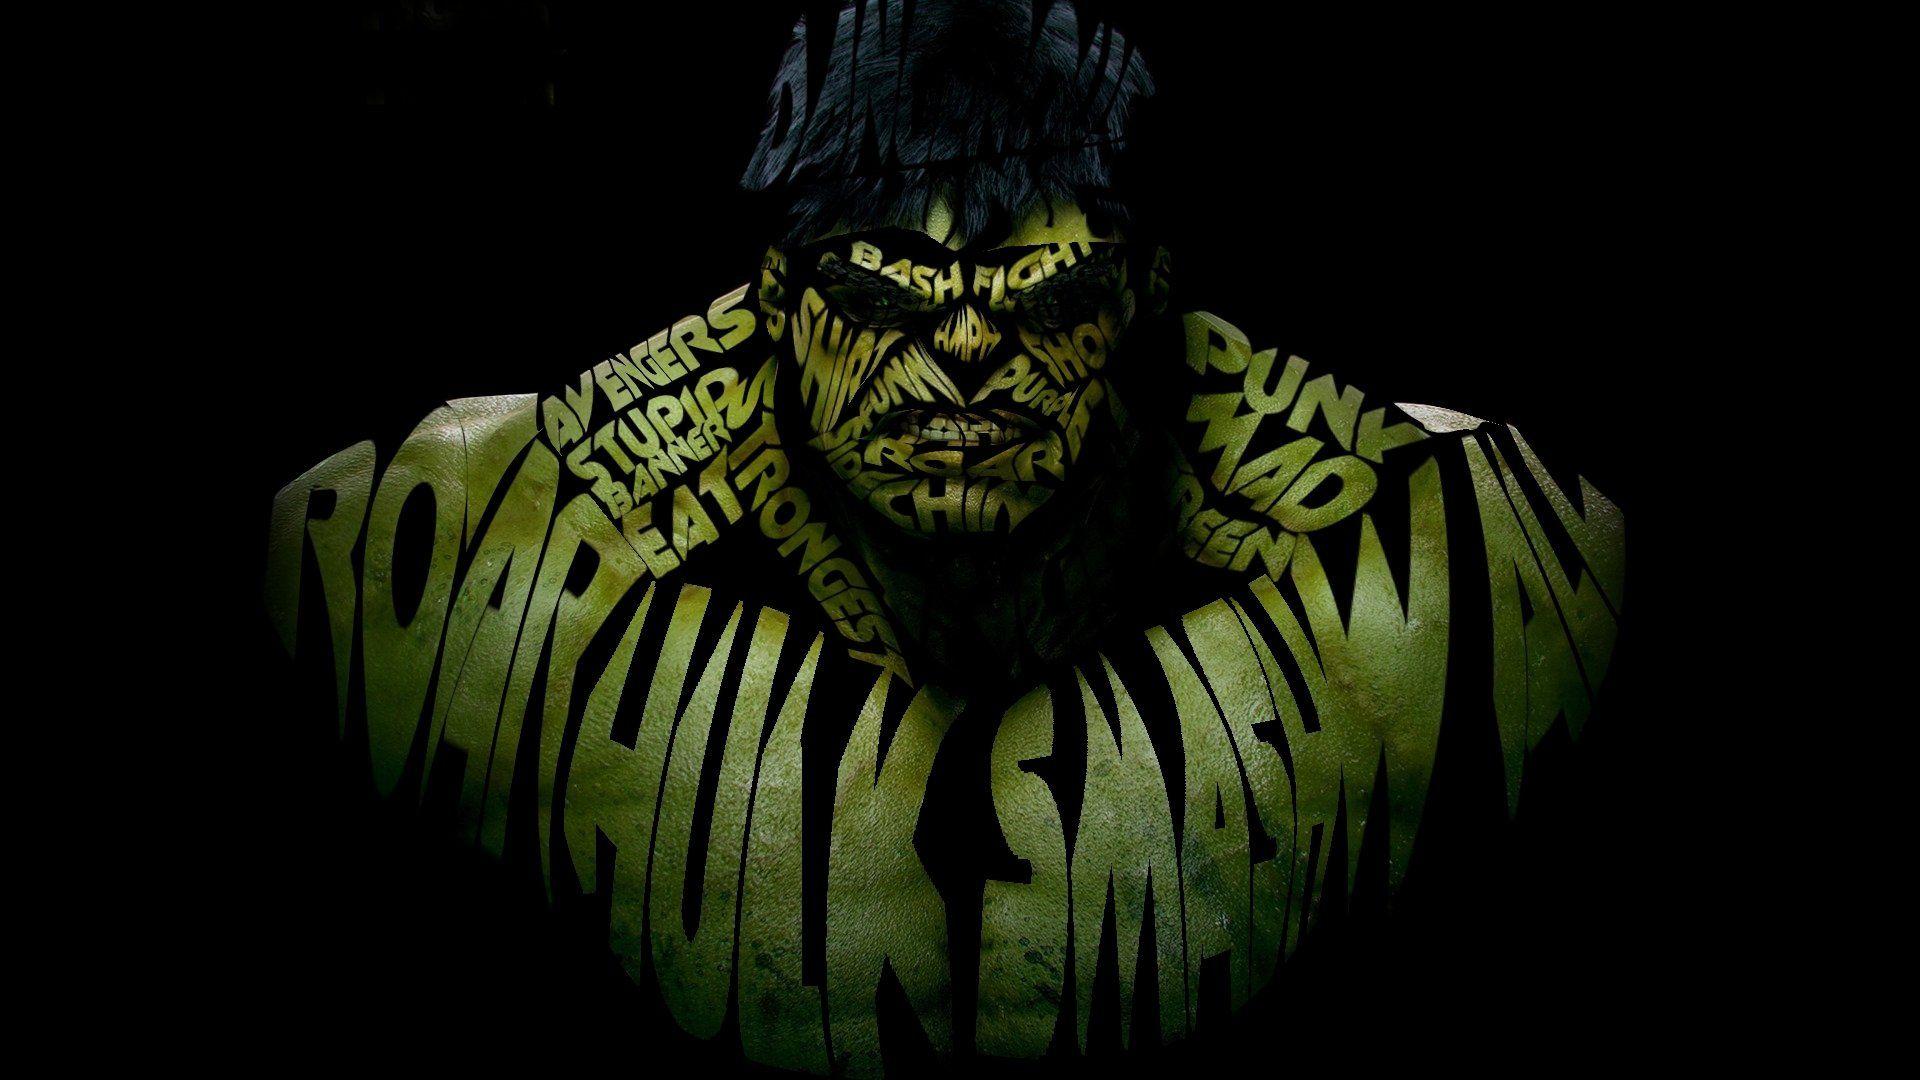 HD Wallpapers Hulk Smash - Wallpaper Cave